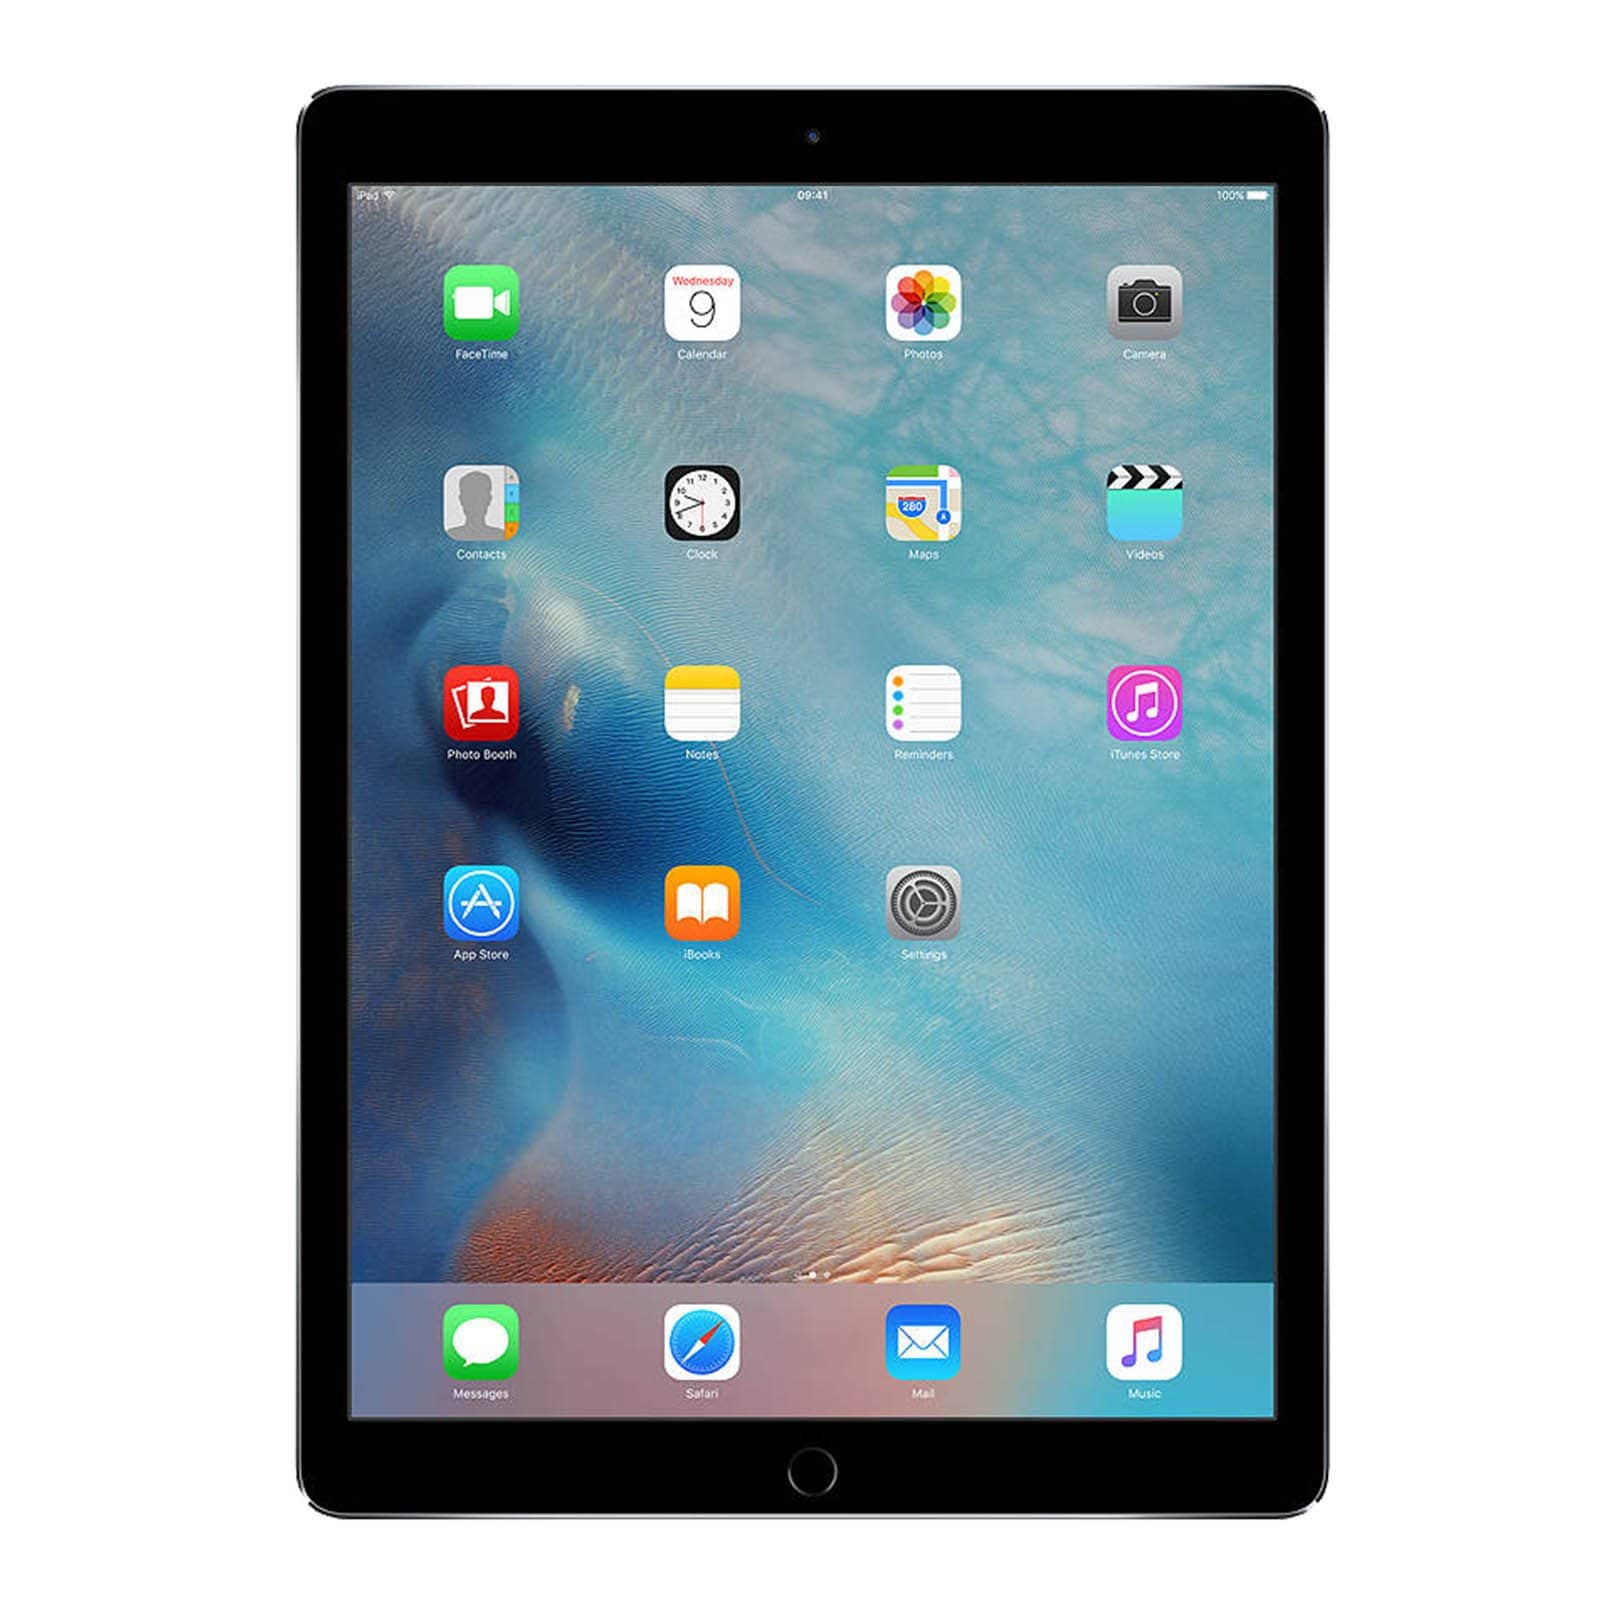 iPad Pro 12.9 Inch 3rd Gen 512GB Space Grey Very Good - Unlocked